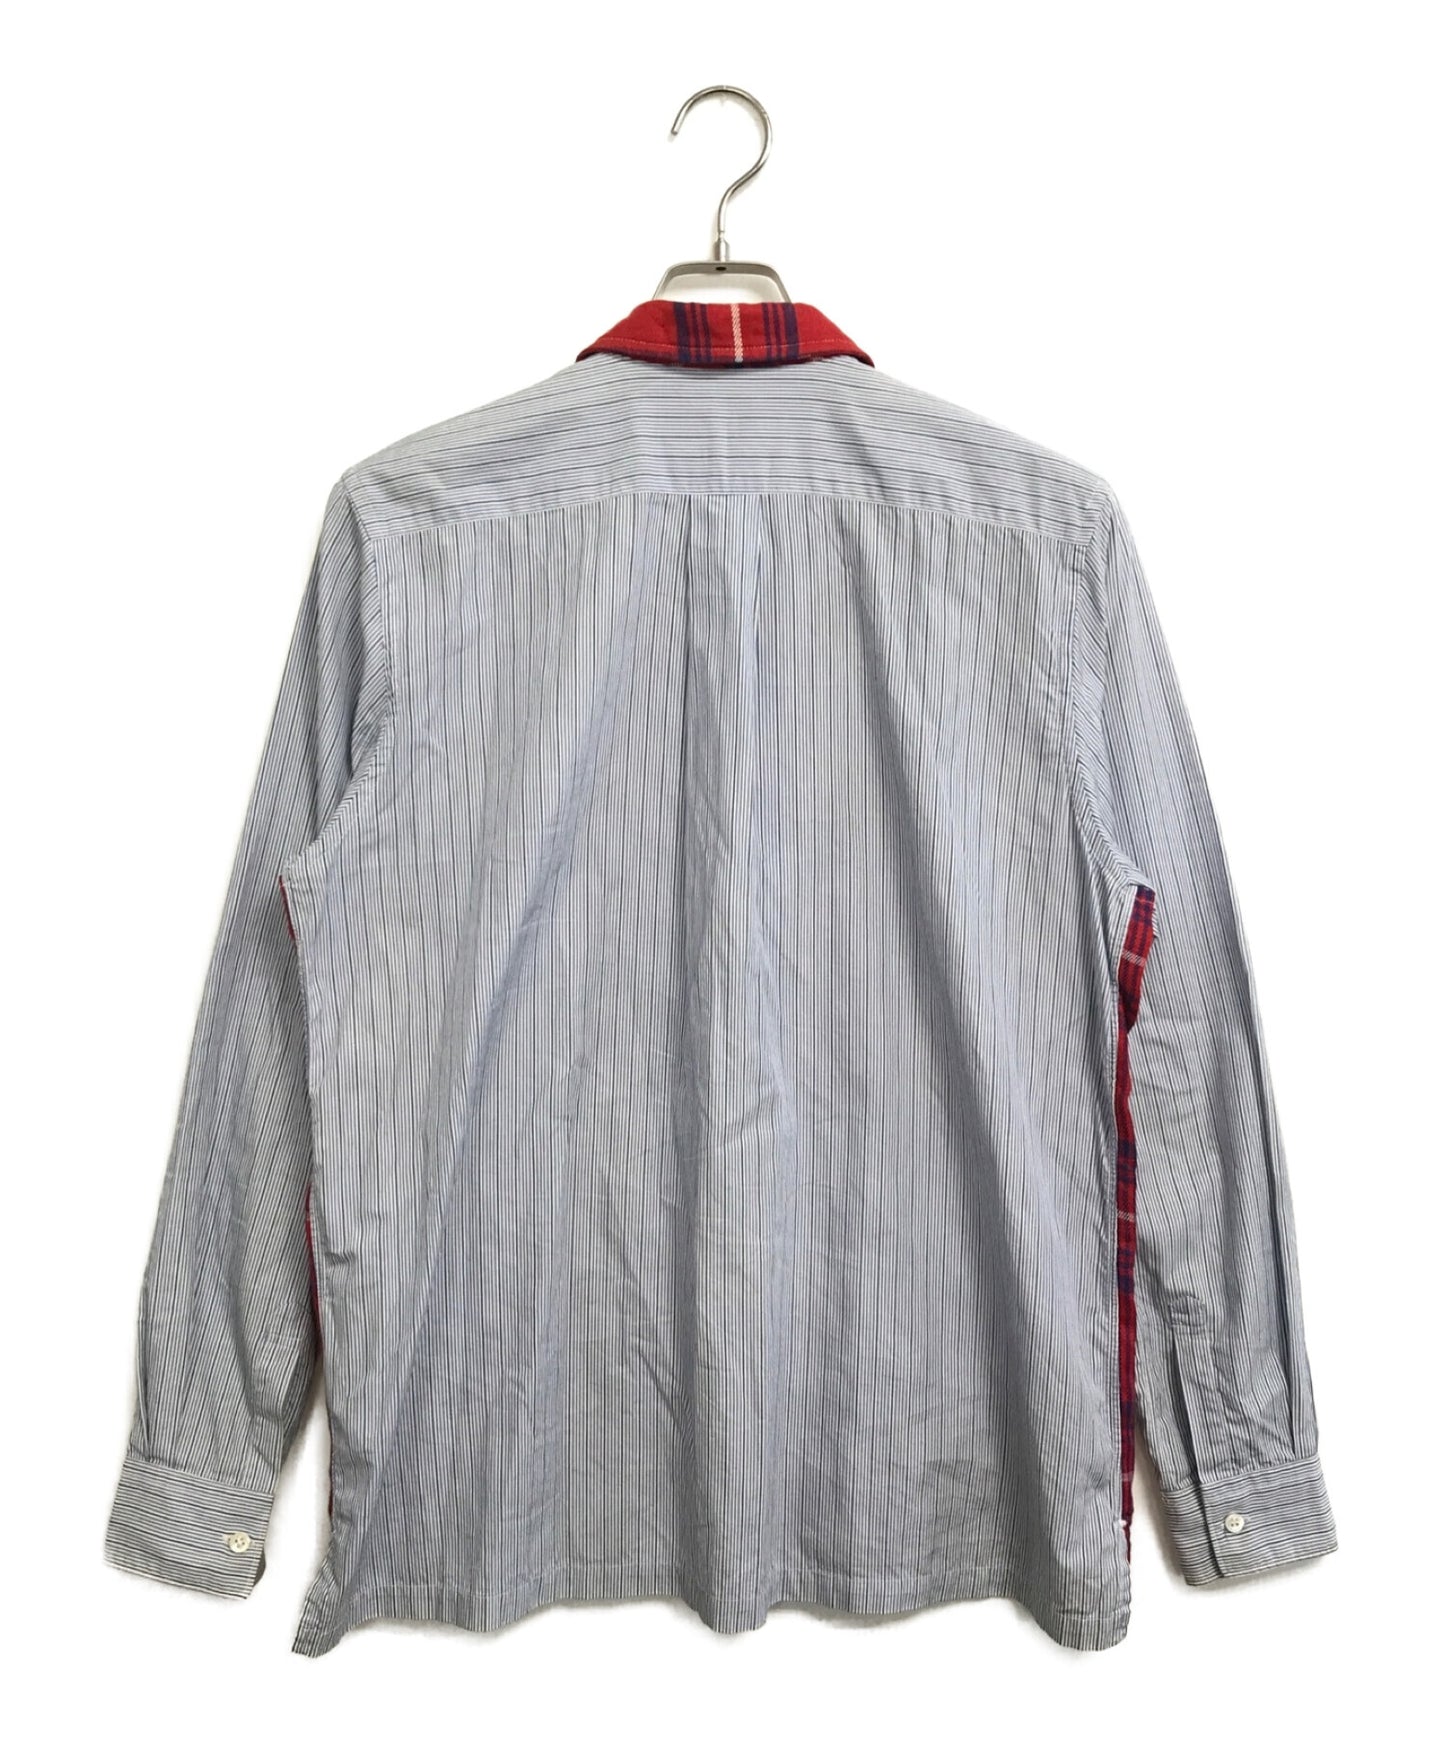 Comme des Garcons 셔츠 00의 전면 확인 스트라이프 셔츠 재킷 S10162